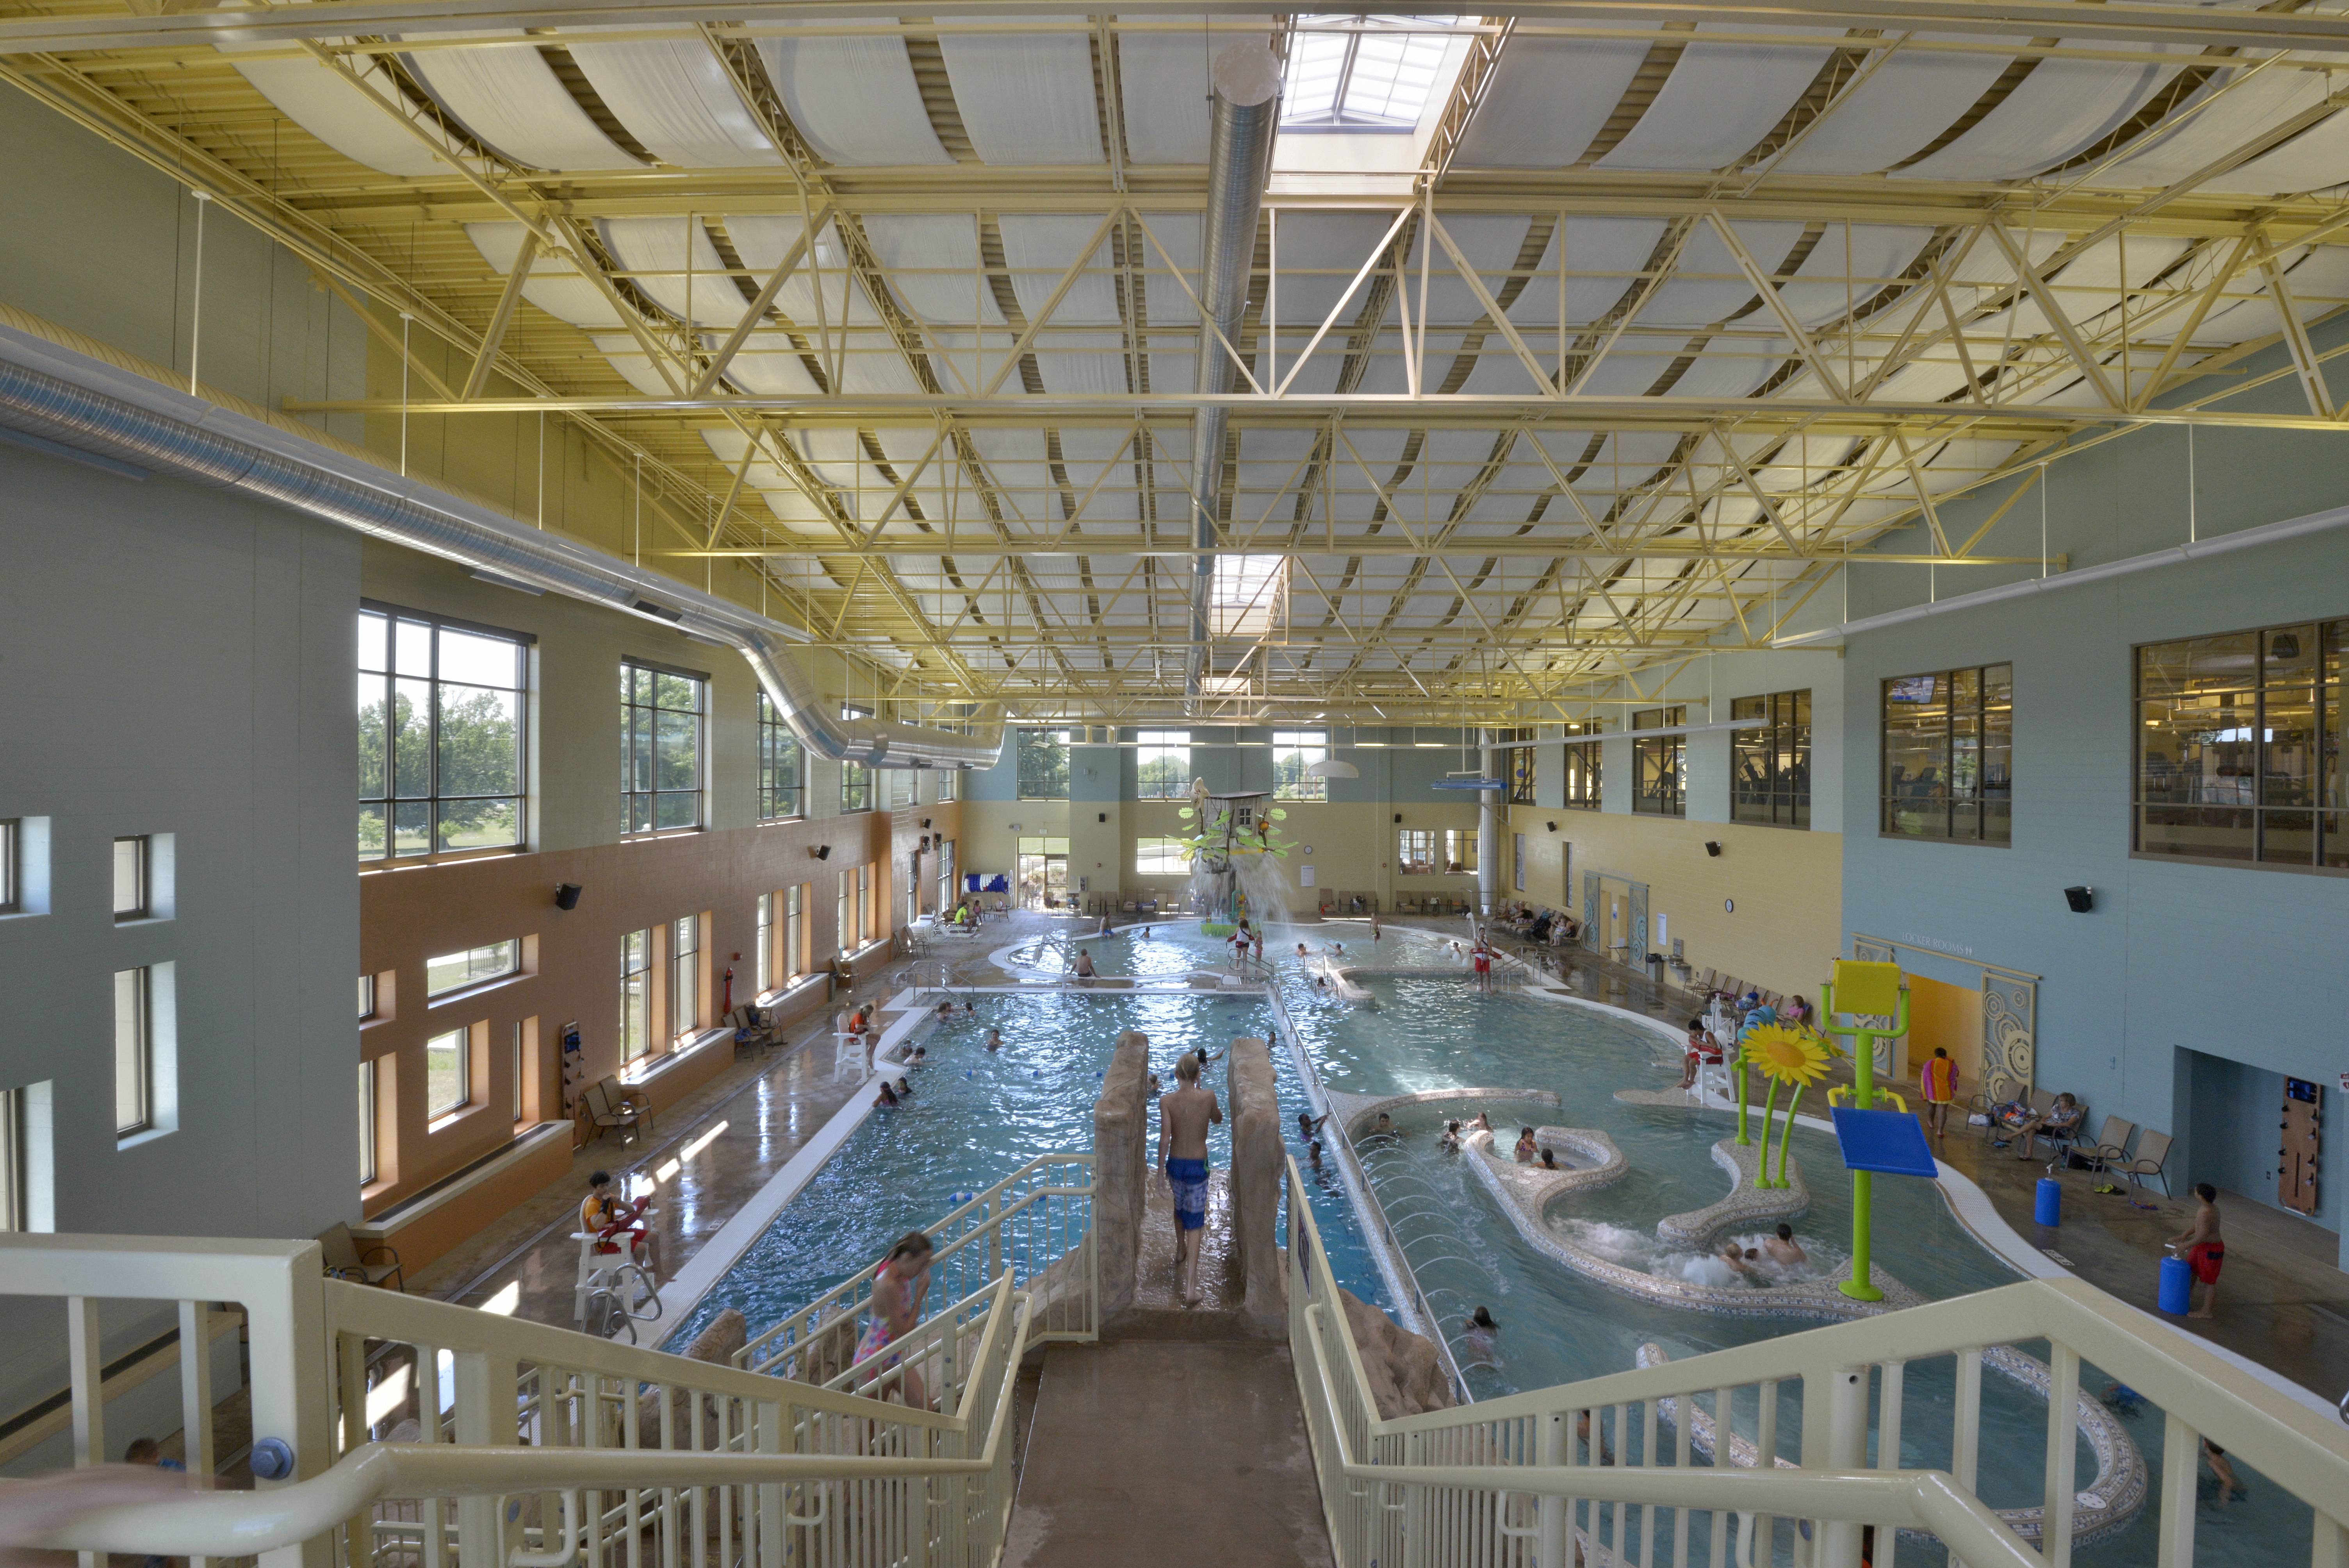 Olathe Community Center pool